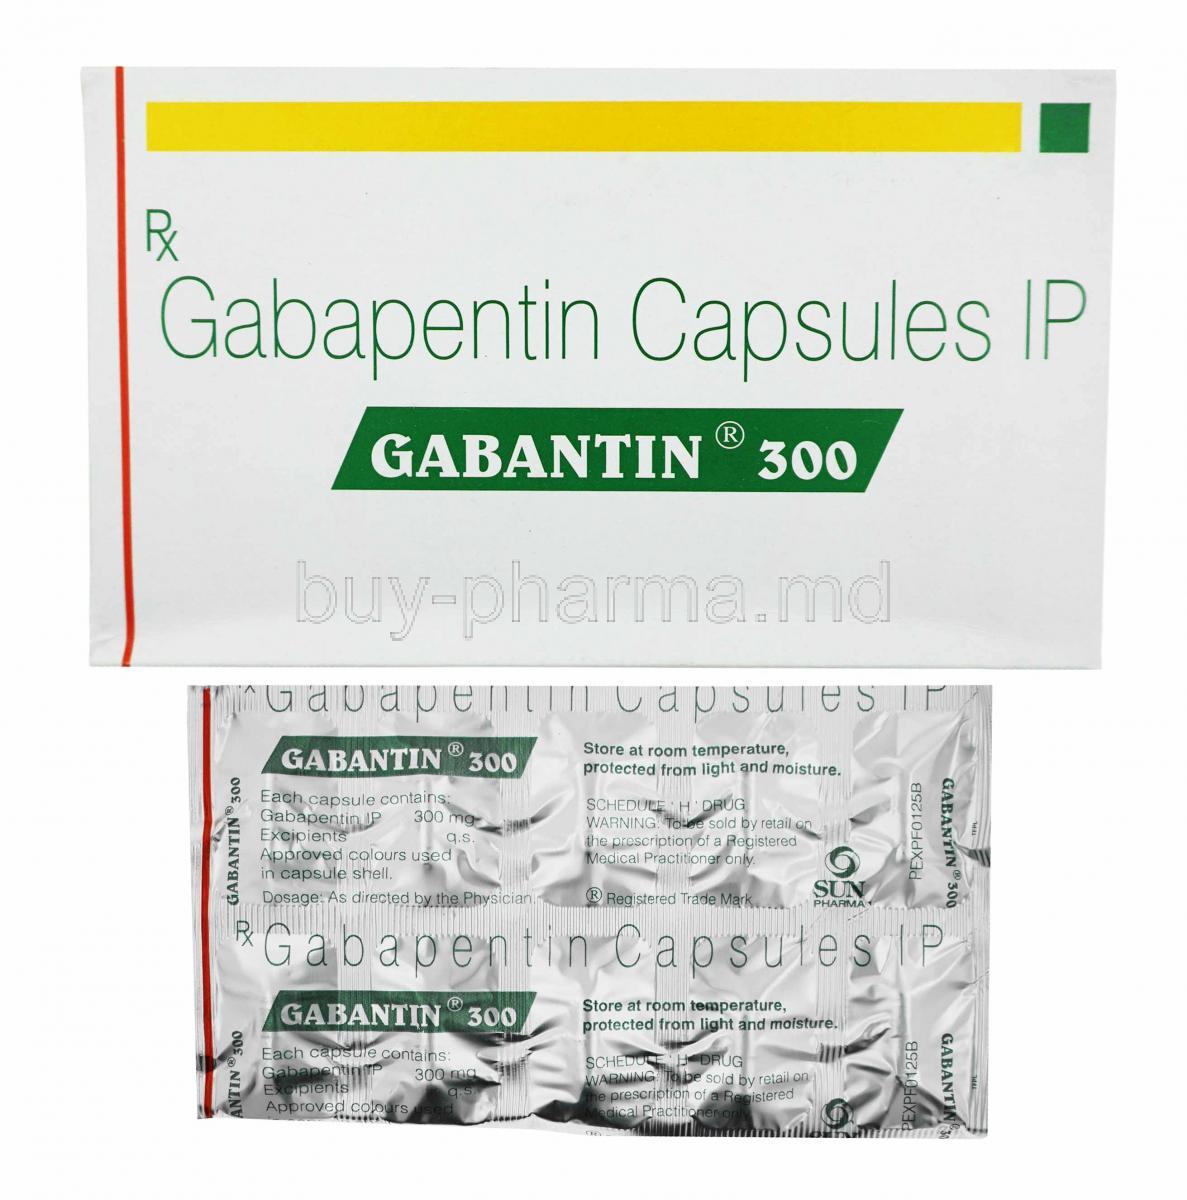 Gabantin, Gabapentin 300mg box and capsules